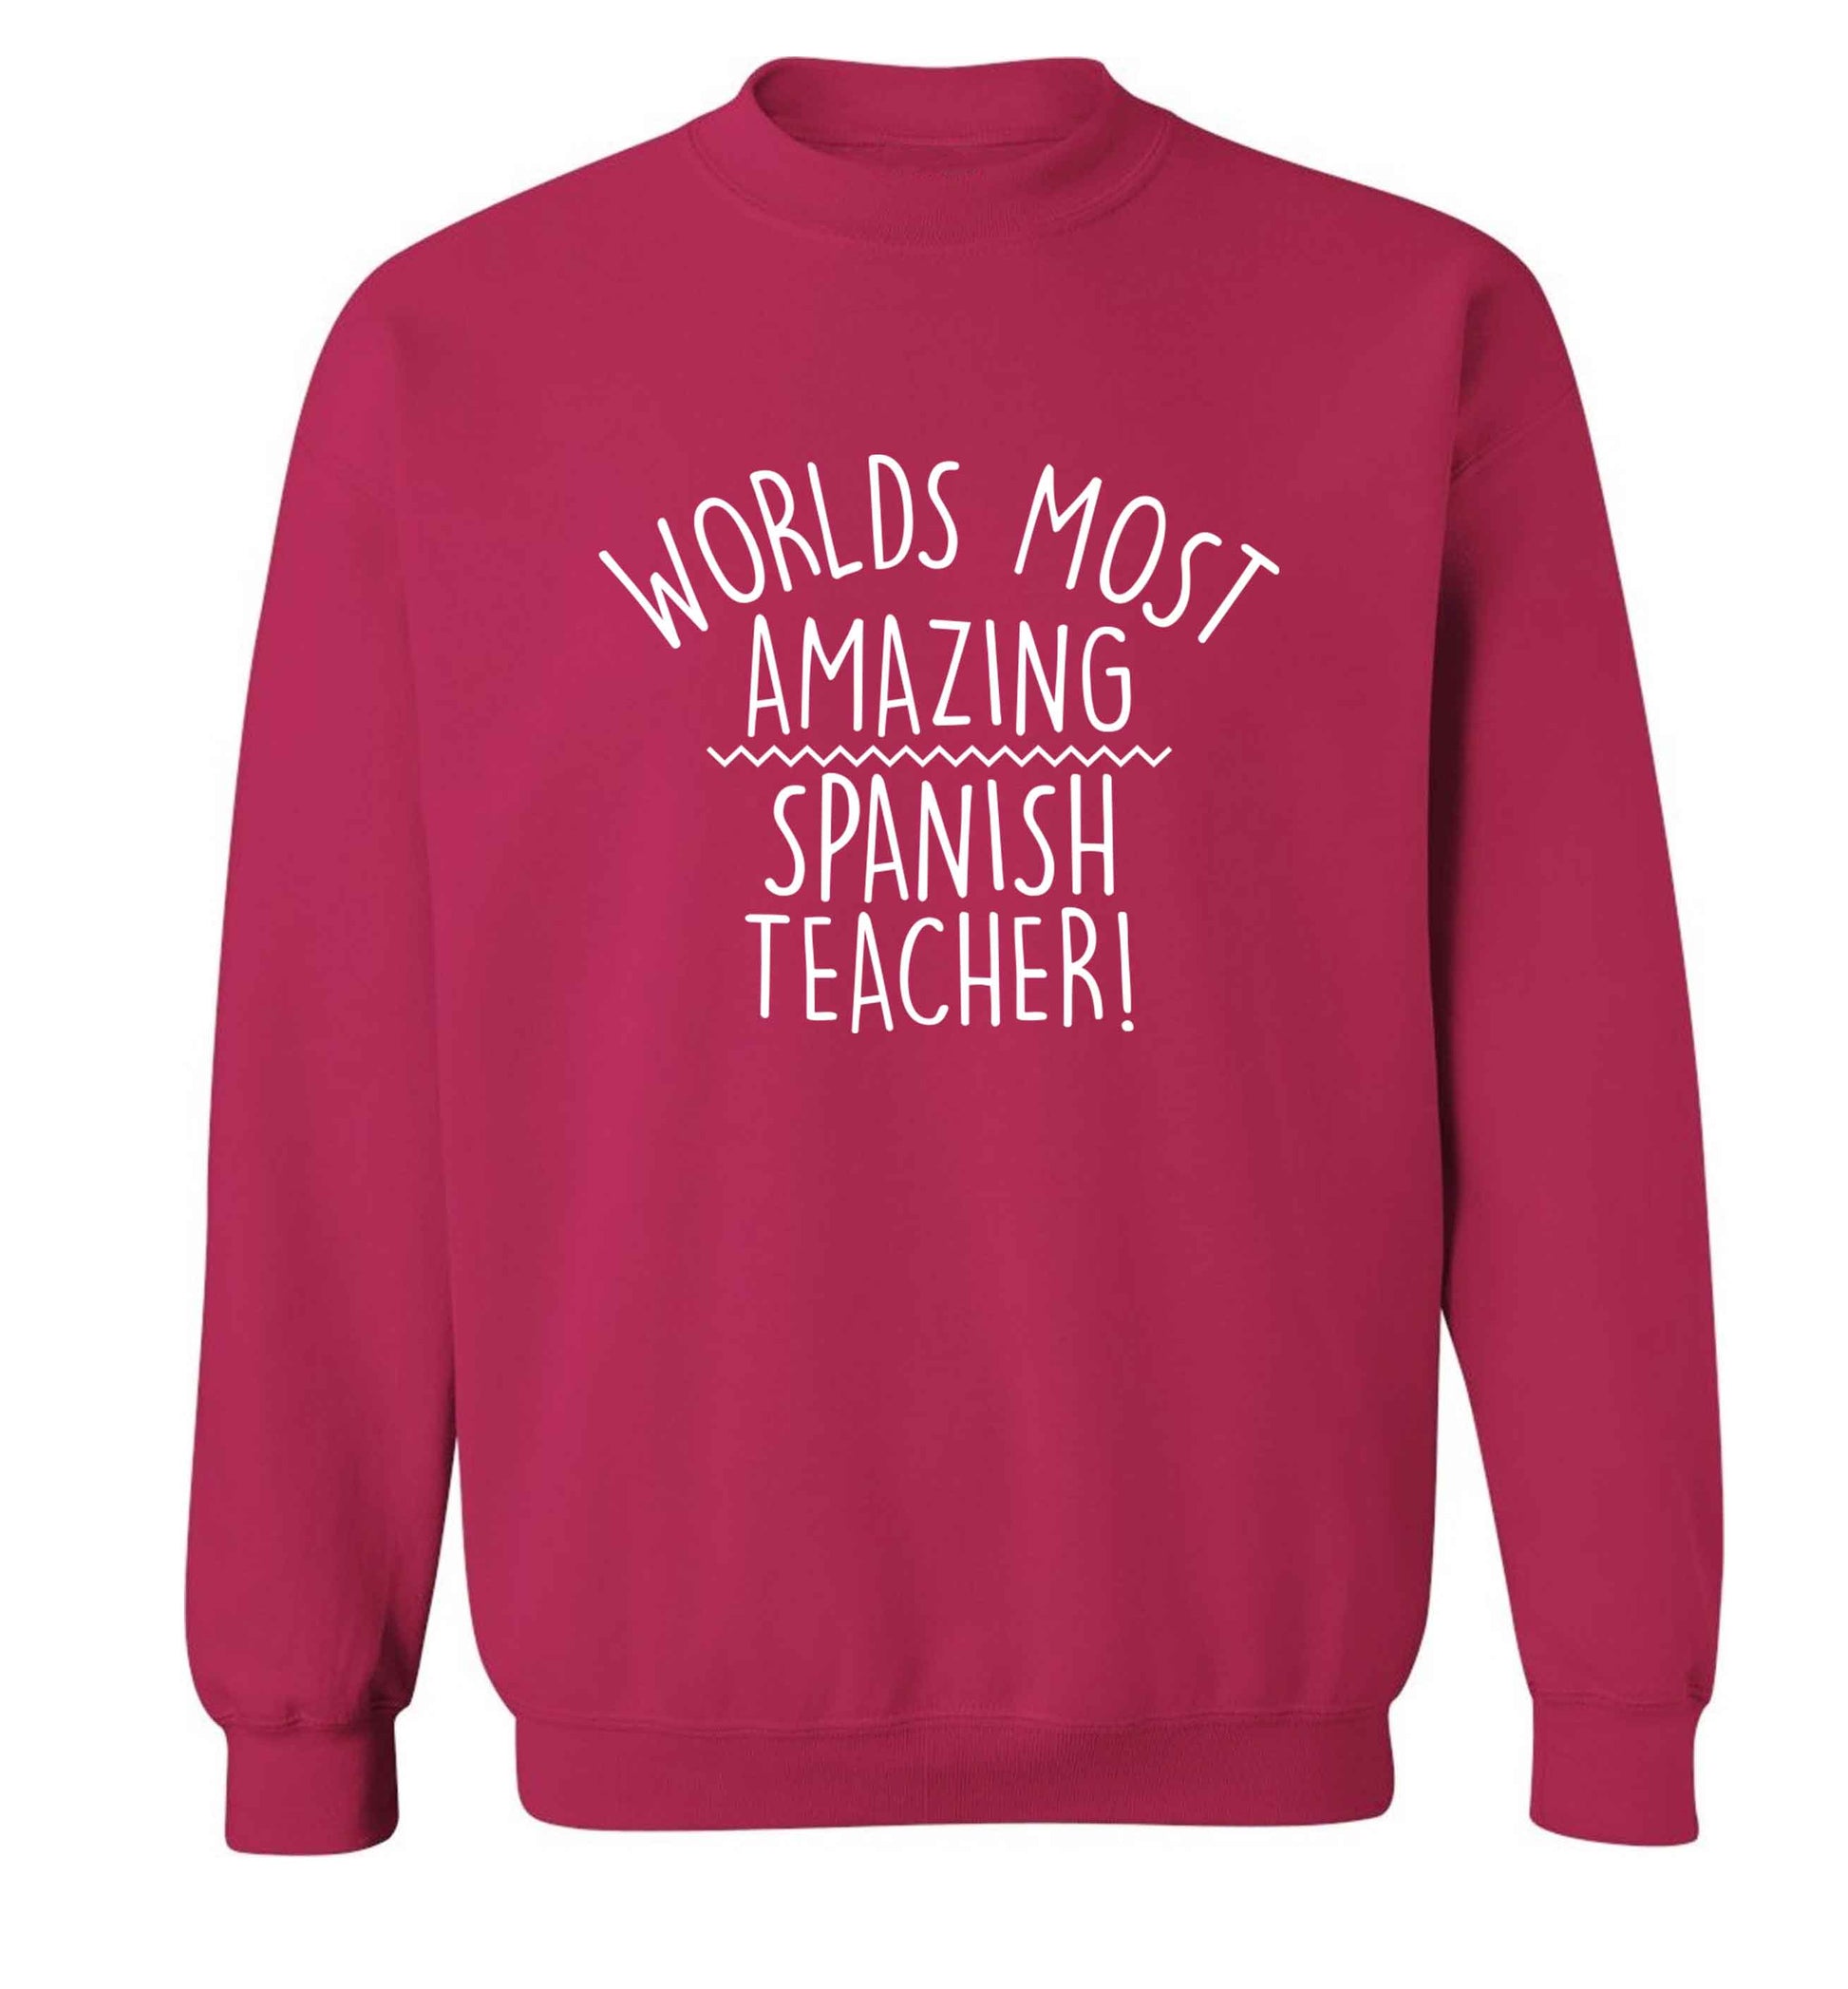 Worlds most amazing Spanish teacher adult's unisex pink sweater 2XL